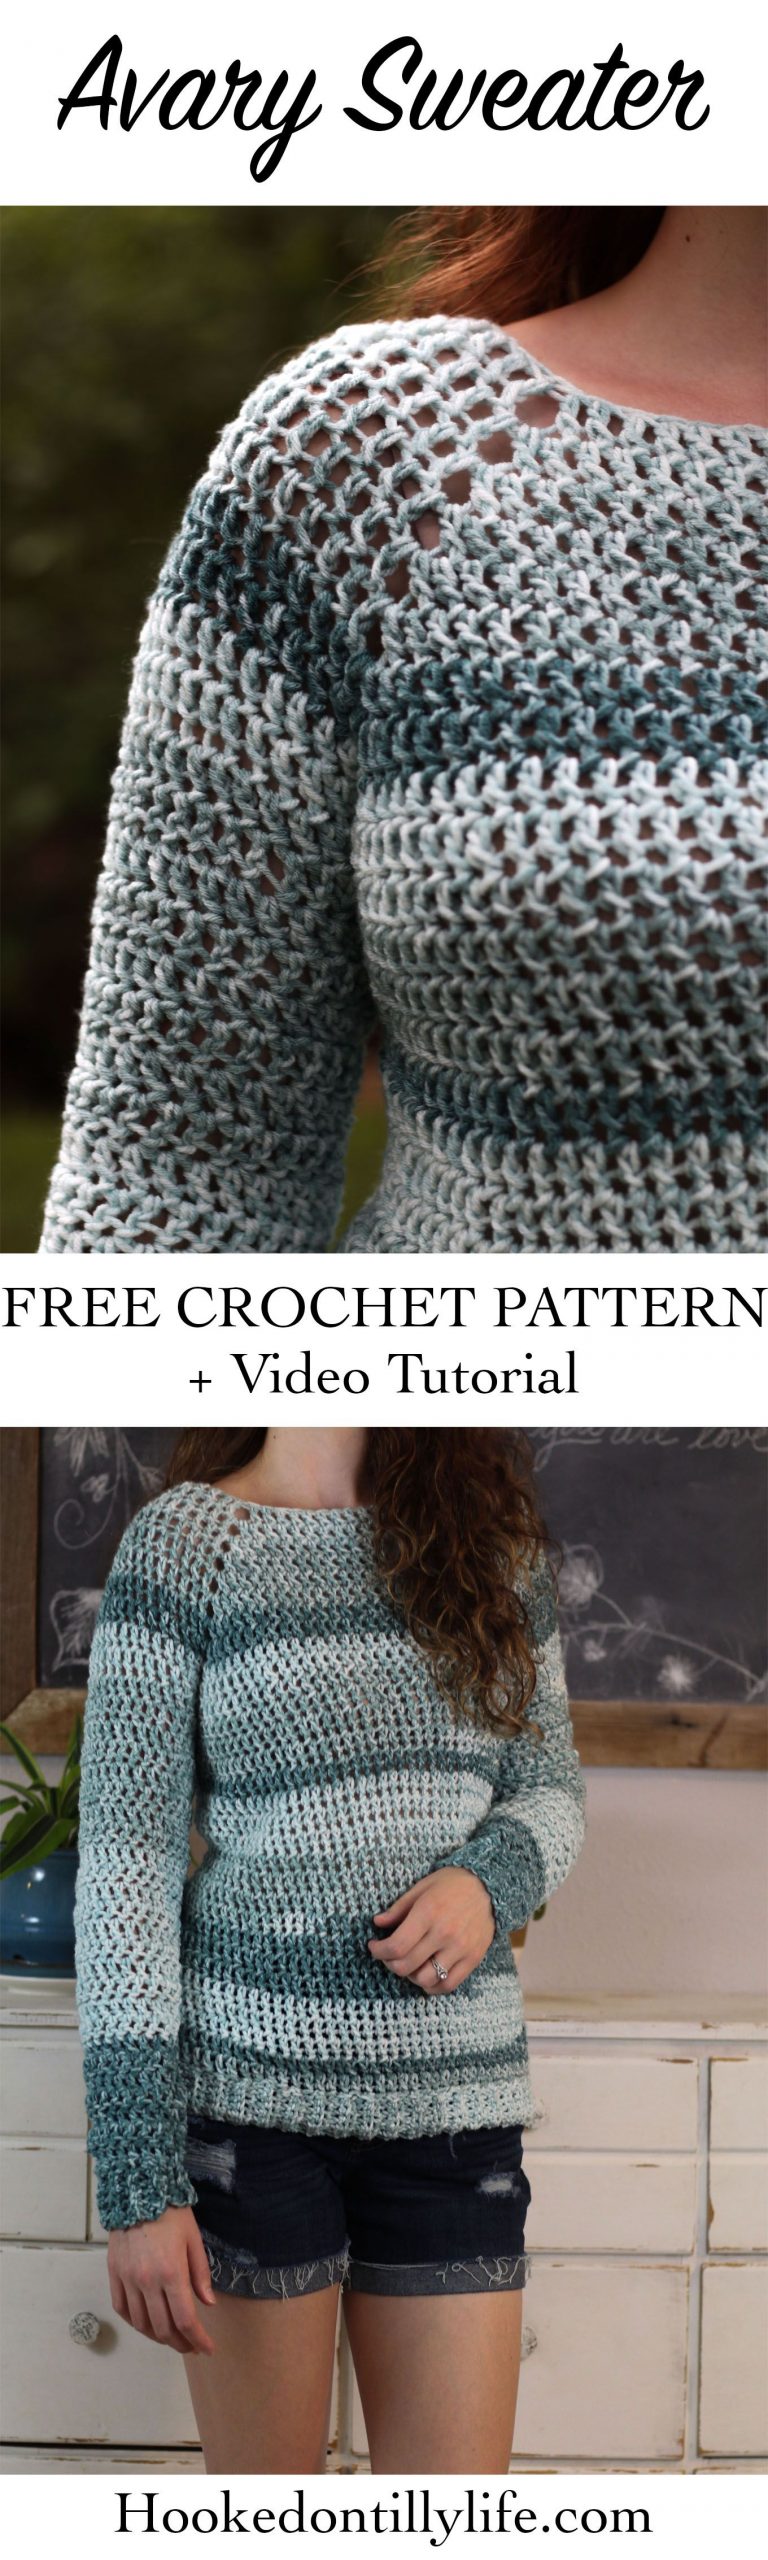 1576422926_639_The-Avary-Sweater-Free-Crochet-Pattern.jpg